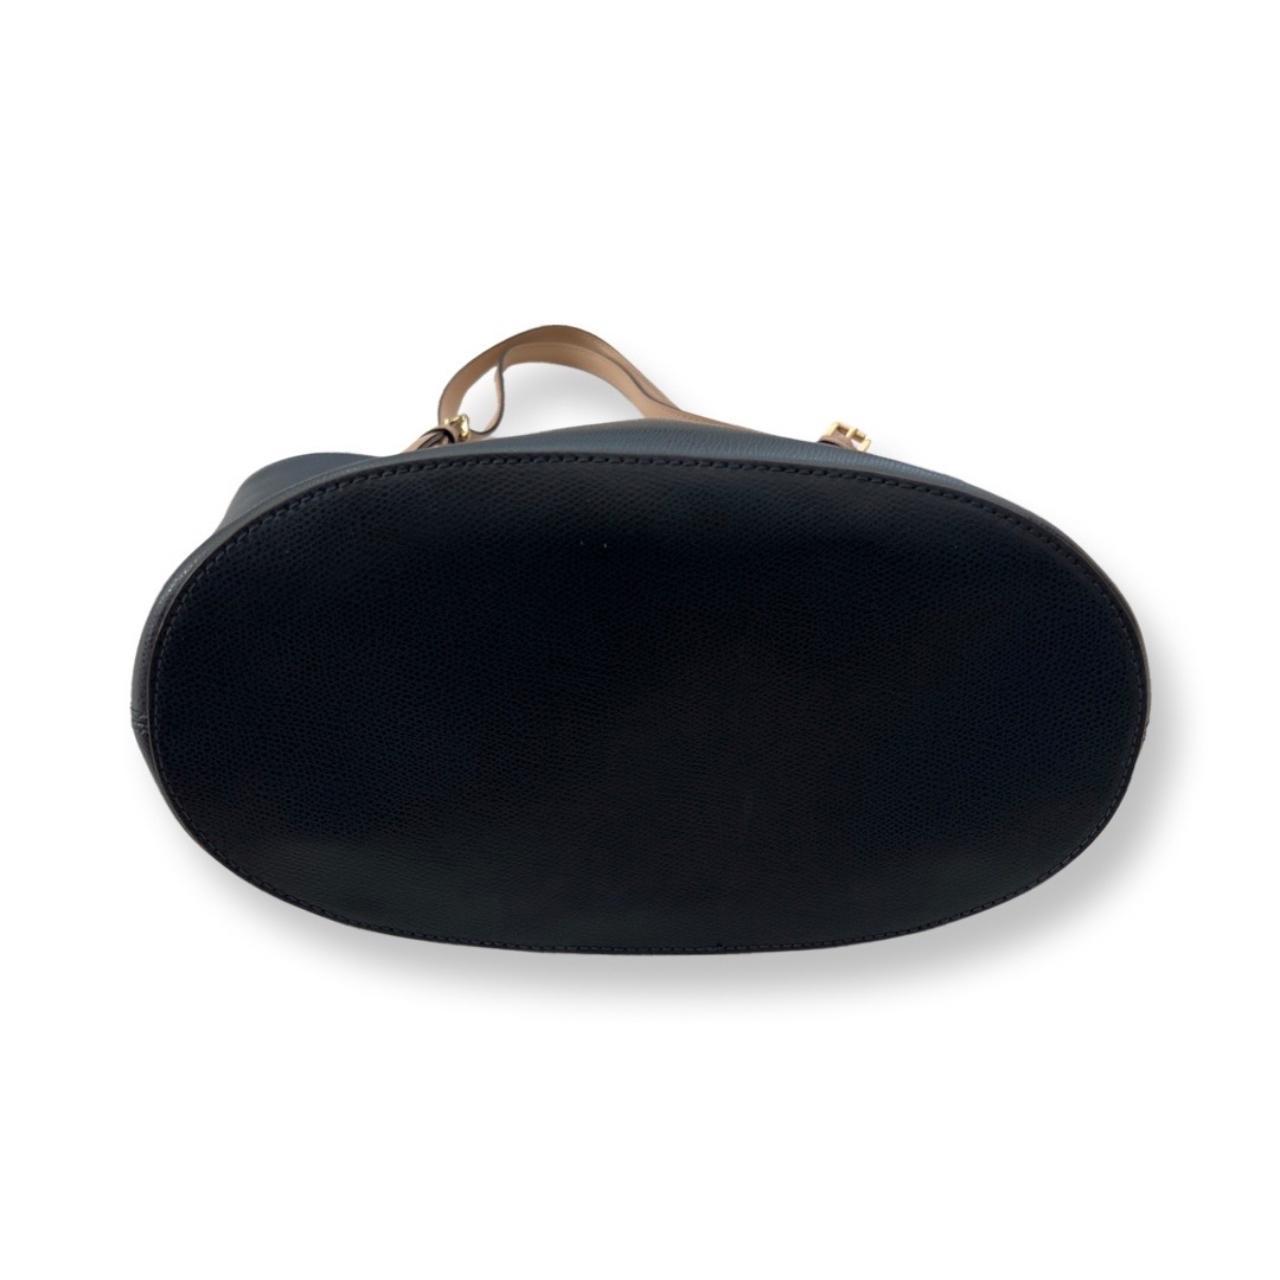 Navy Blue Voyager Large Saffiano Leather Tote Bag. - Depop